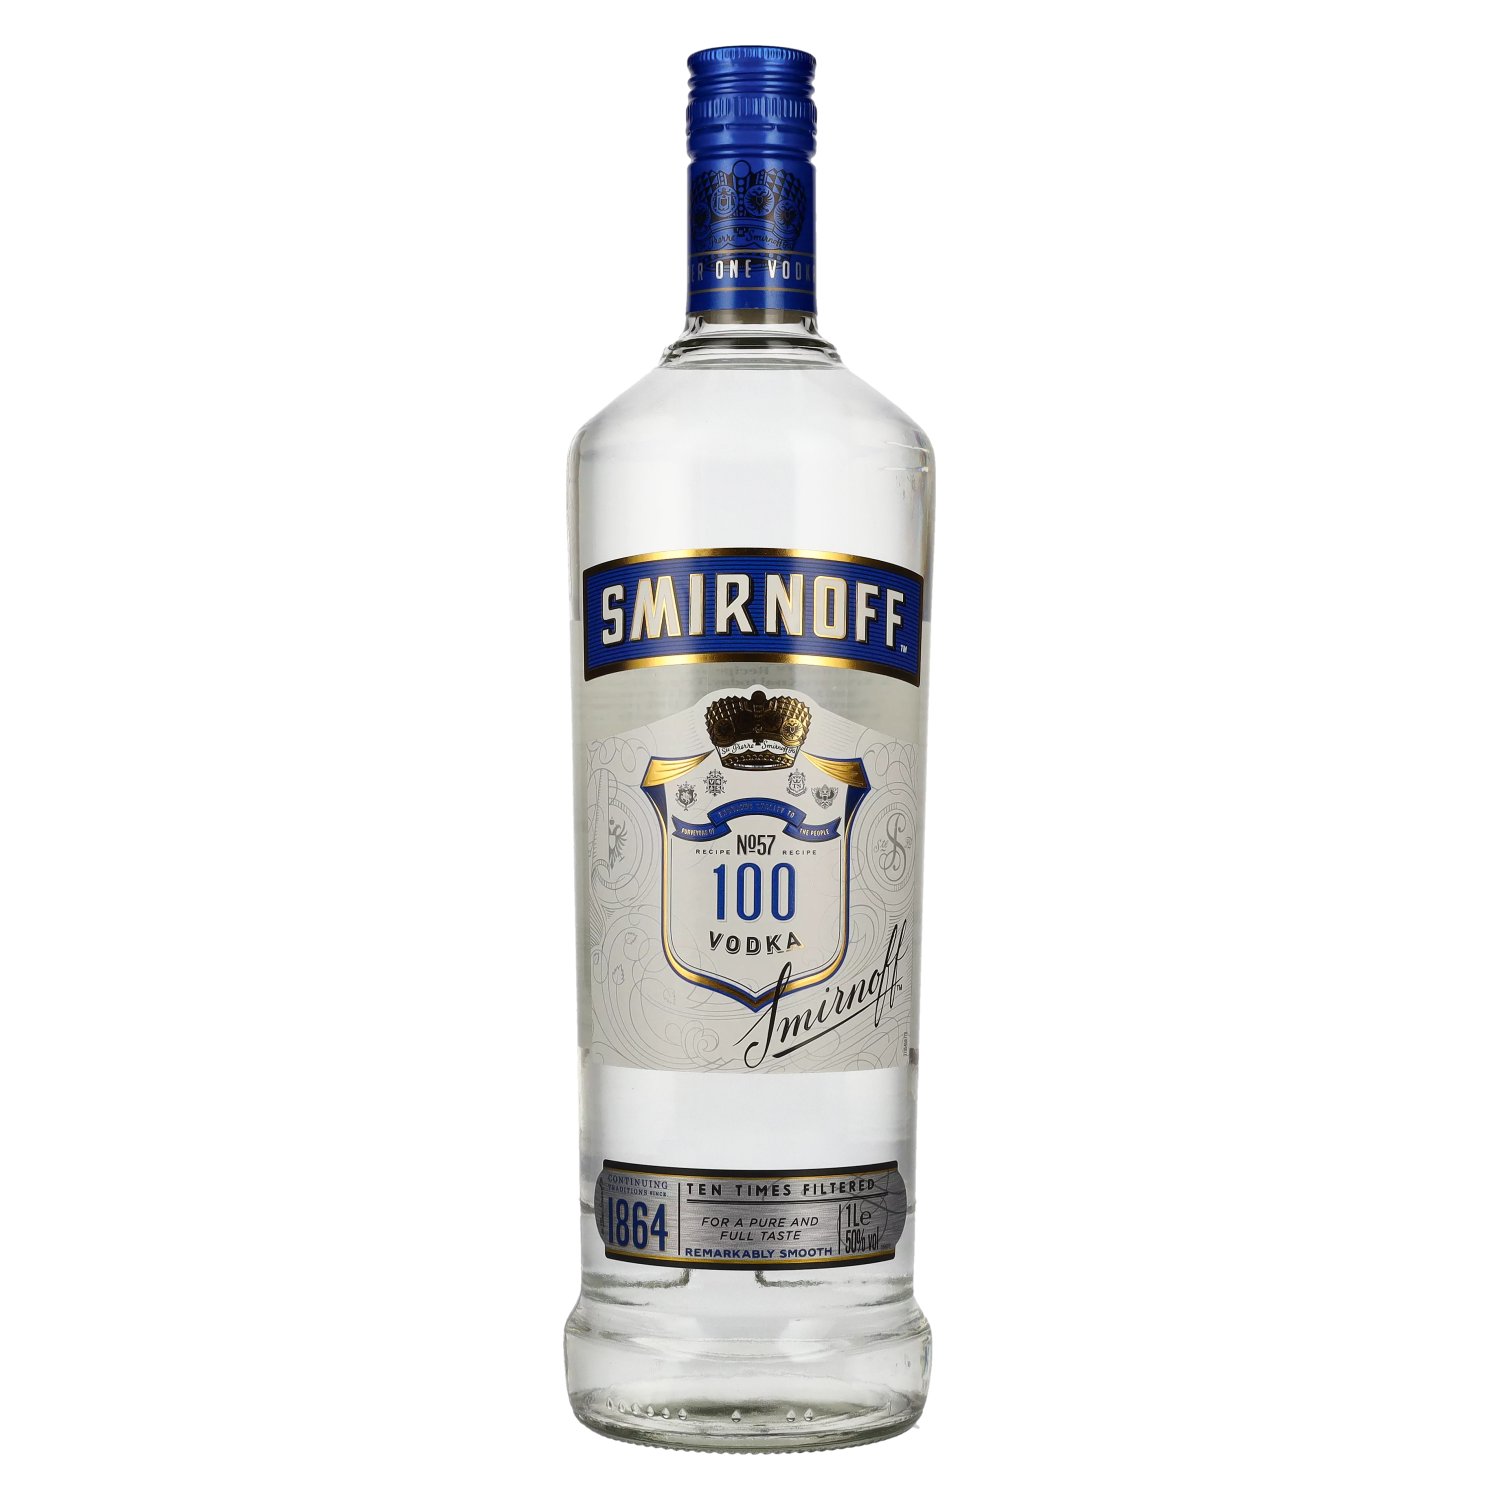 1l 100 Vol. Vodka Blue Smirnoff 50% Triple PROOF Label Distilled